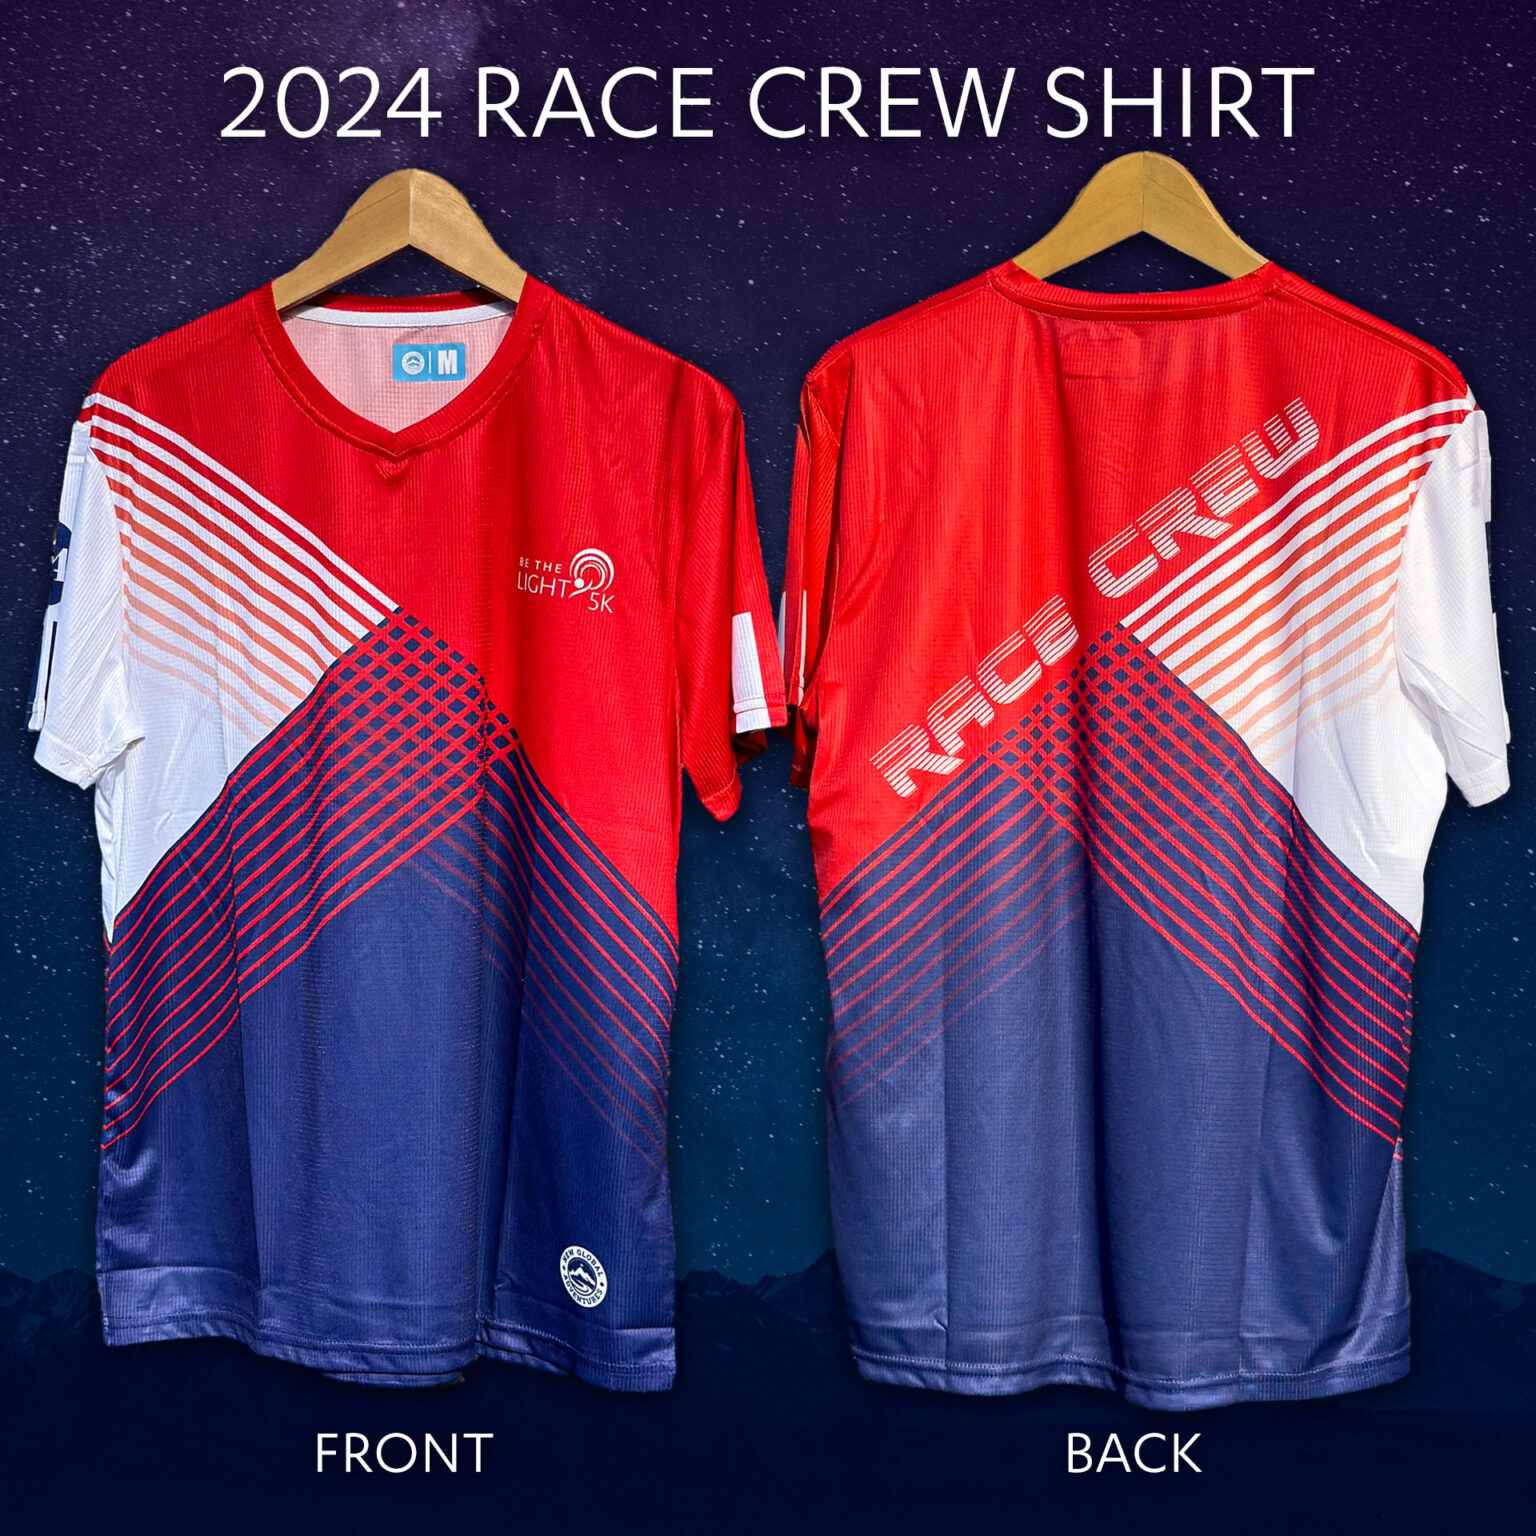 2024 Race Crew Shirt